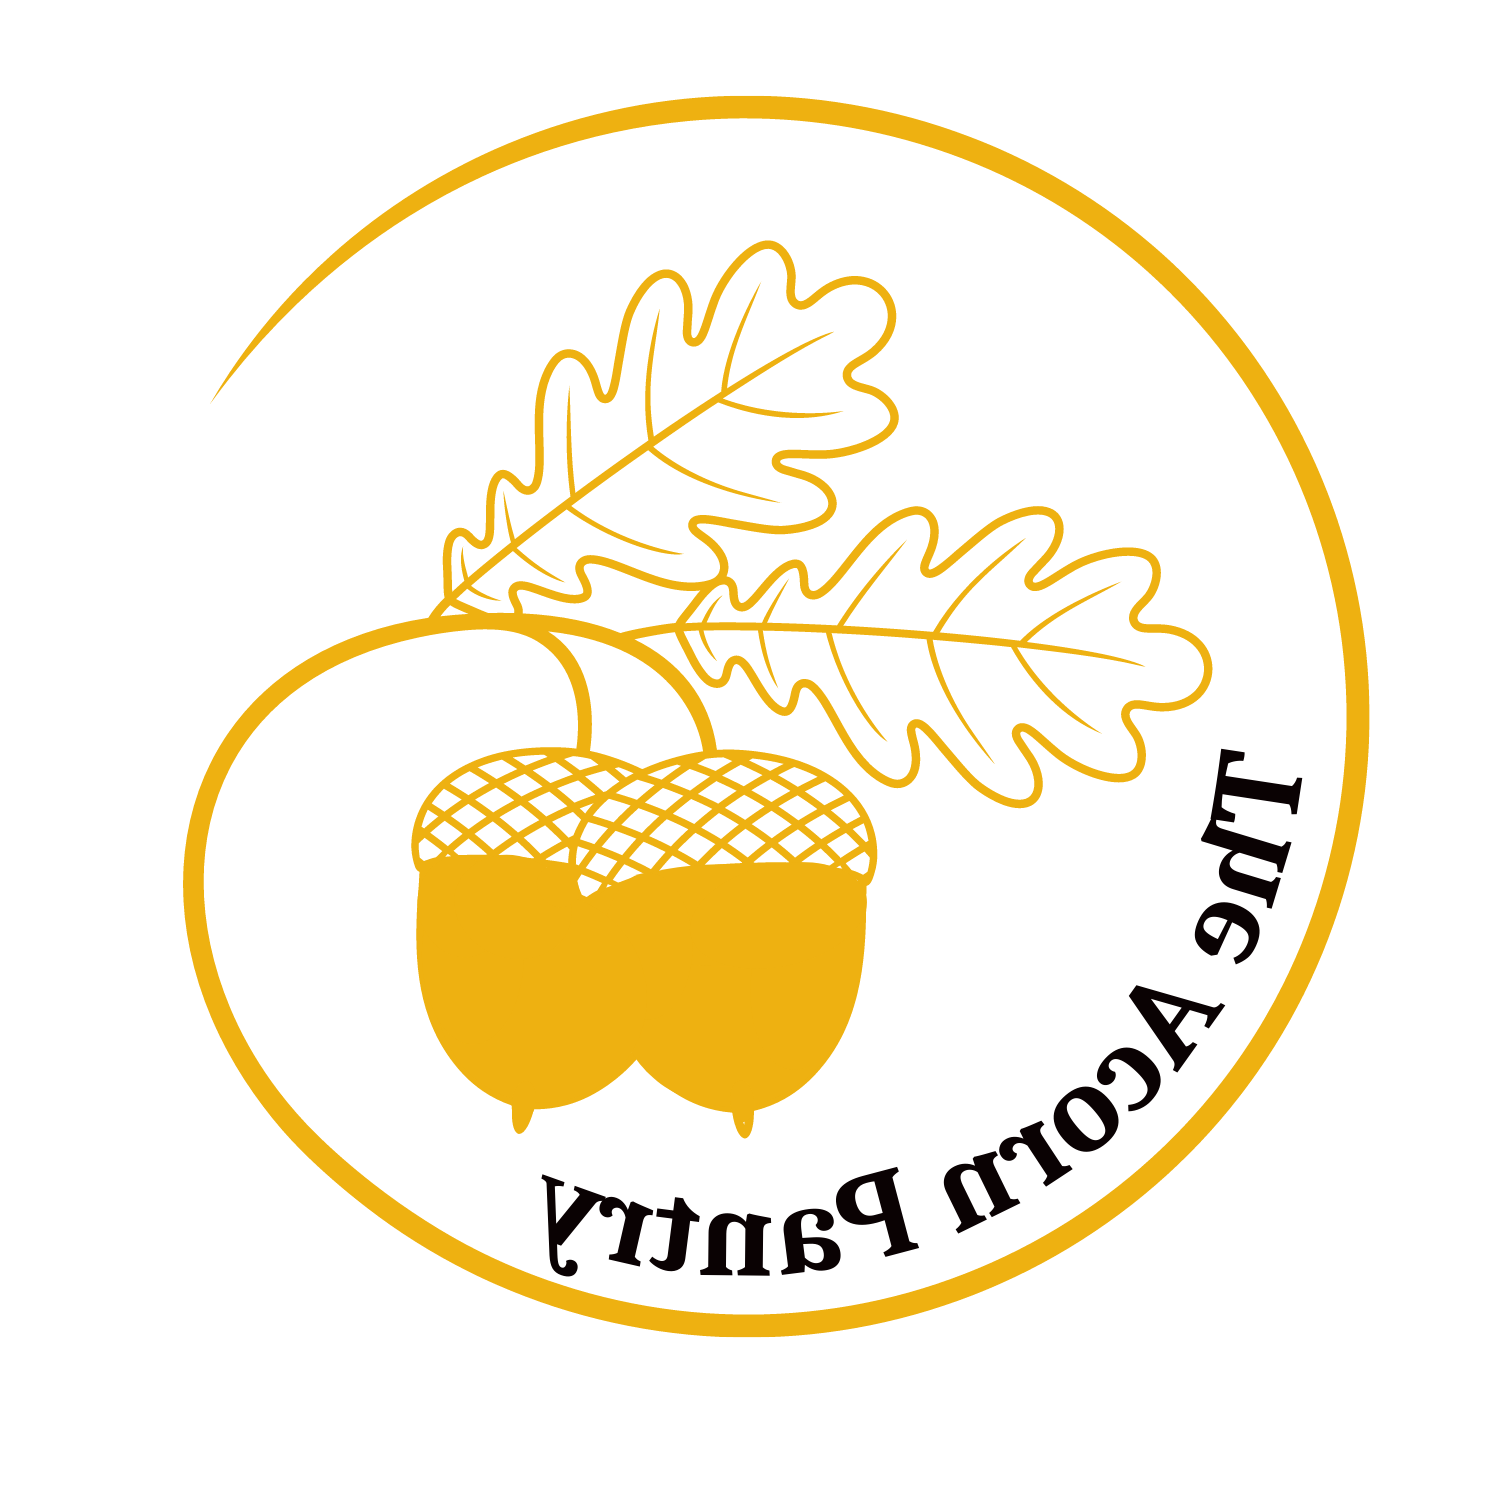 acorn pantry logo new